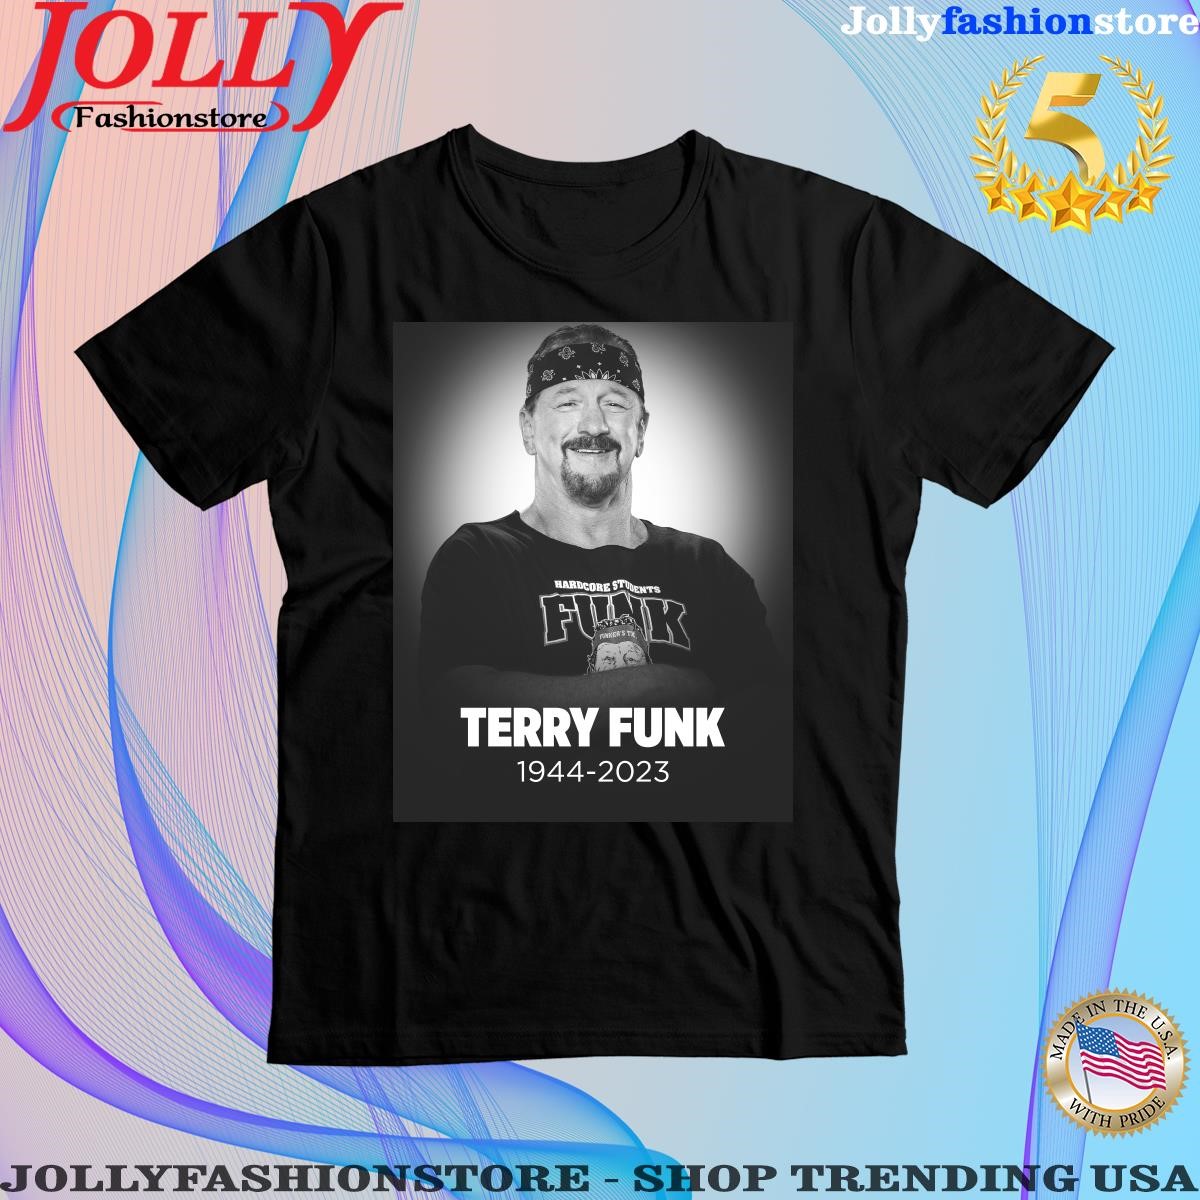 Trending wwe On Fox Rip Terry Funk 1944 2023 Wwe Hall Of Famer Shirt